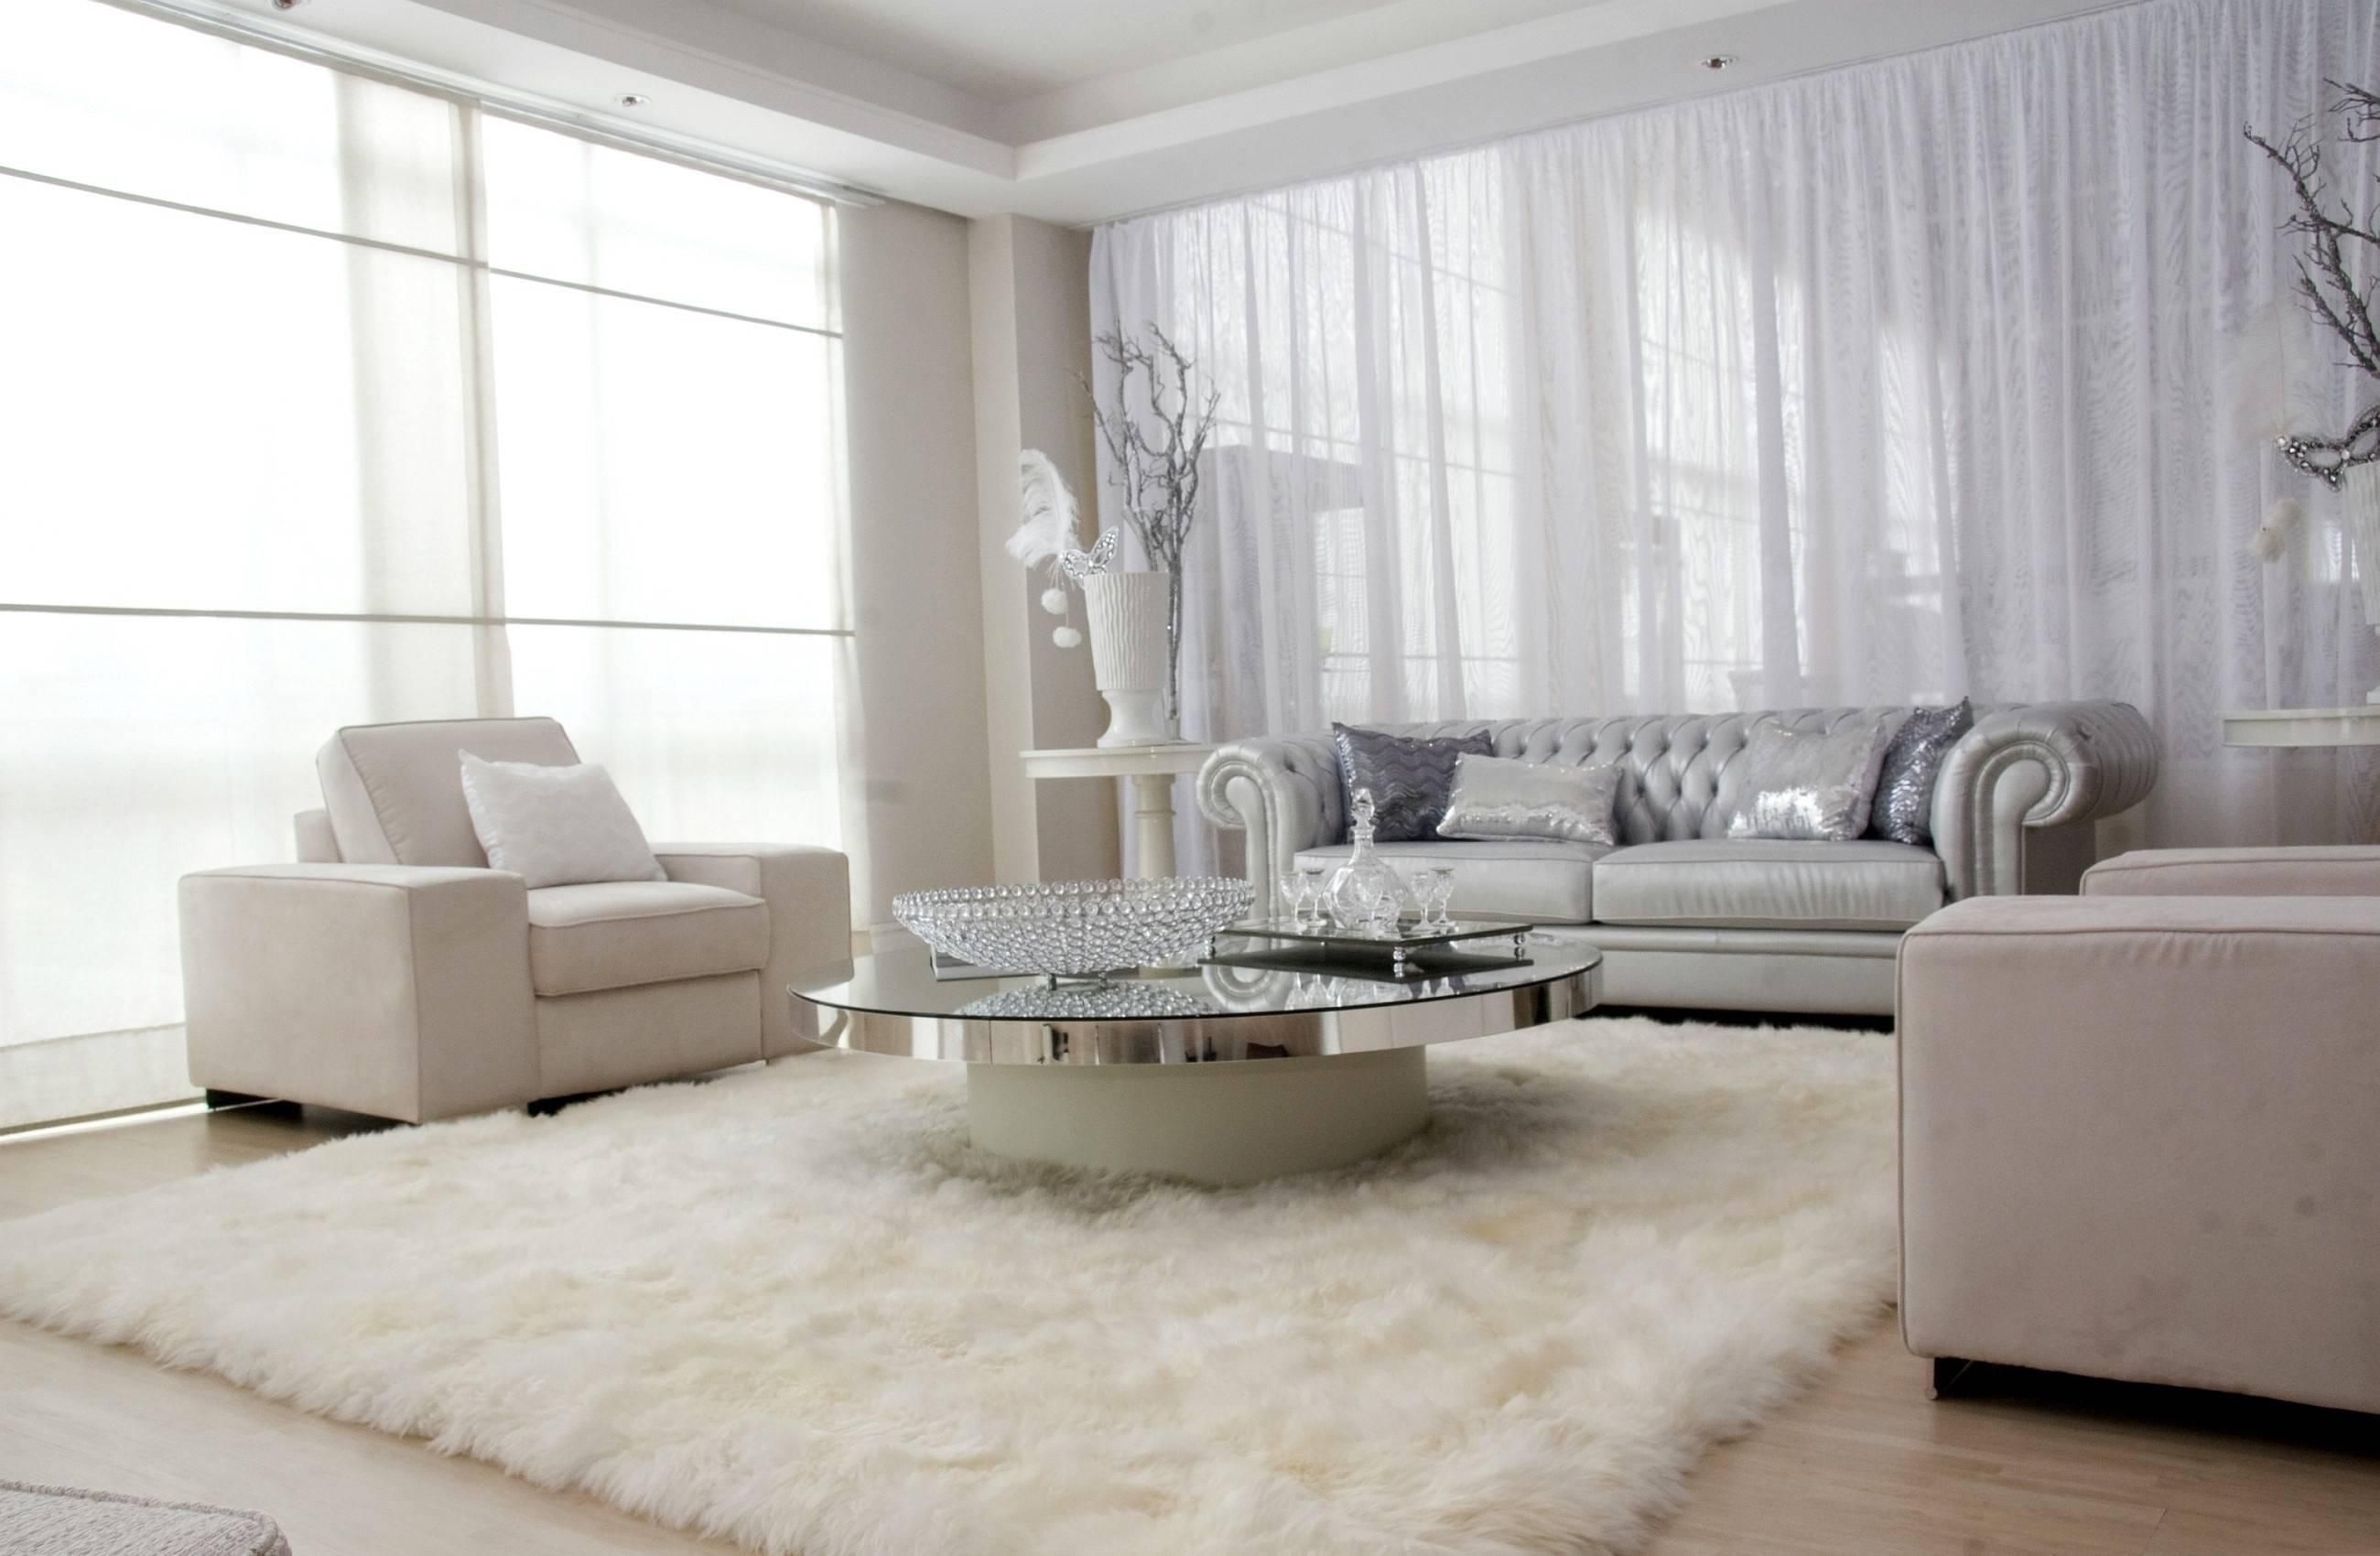 White furniture in room free desktop background - free wallpaper image